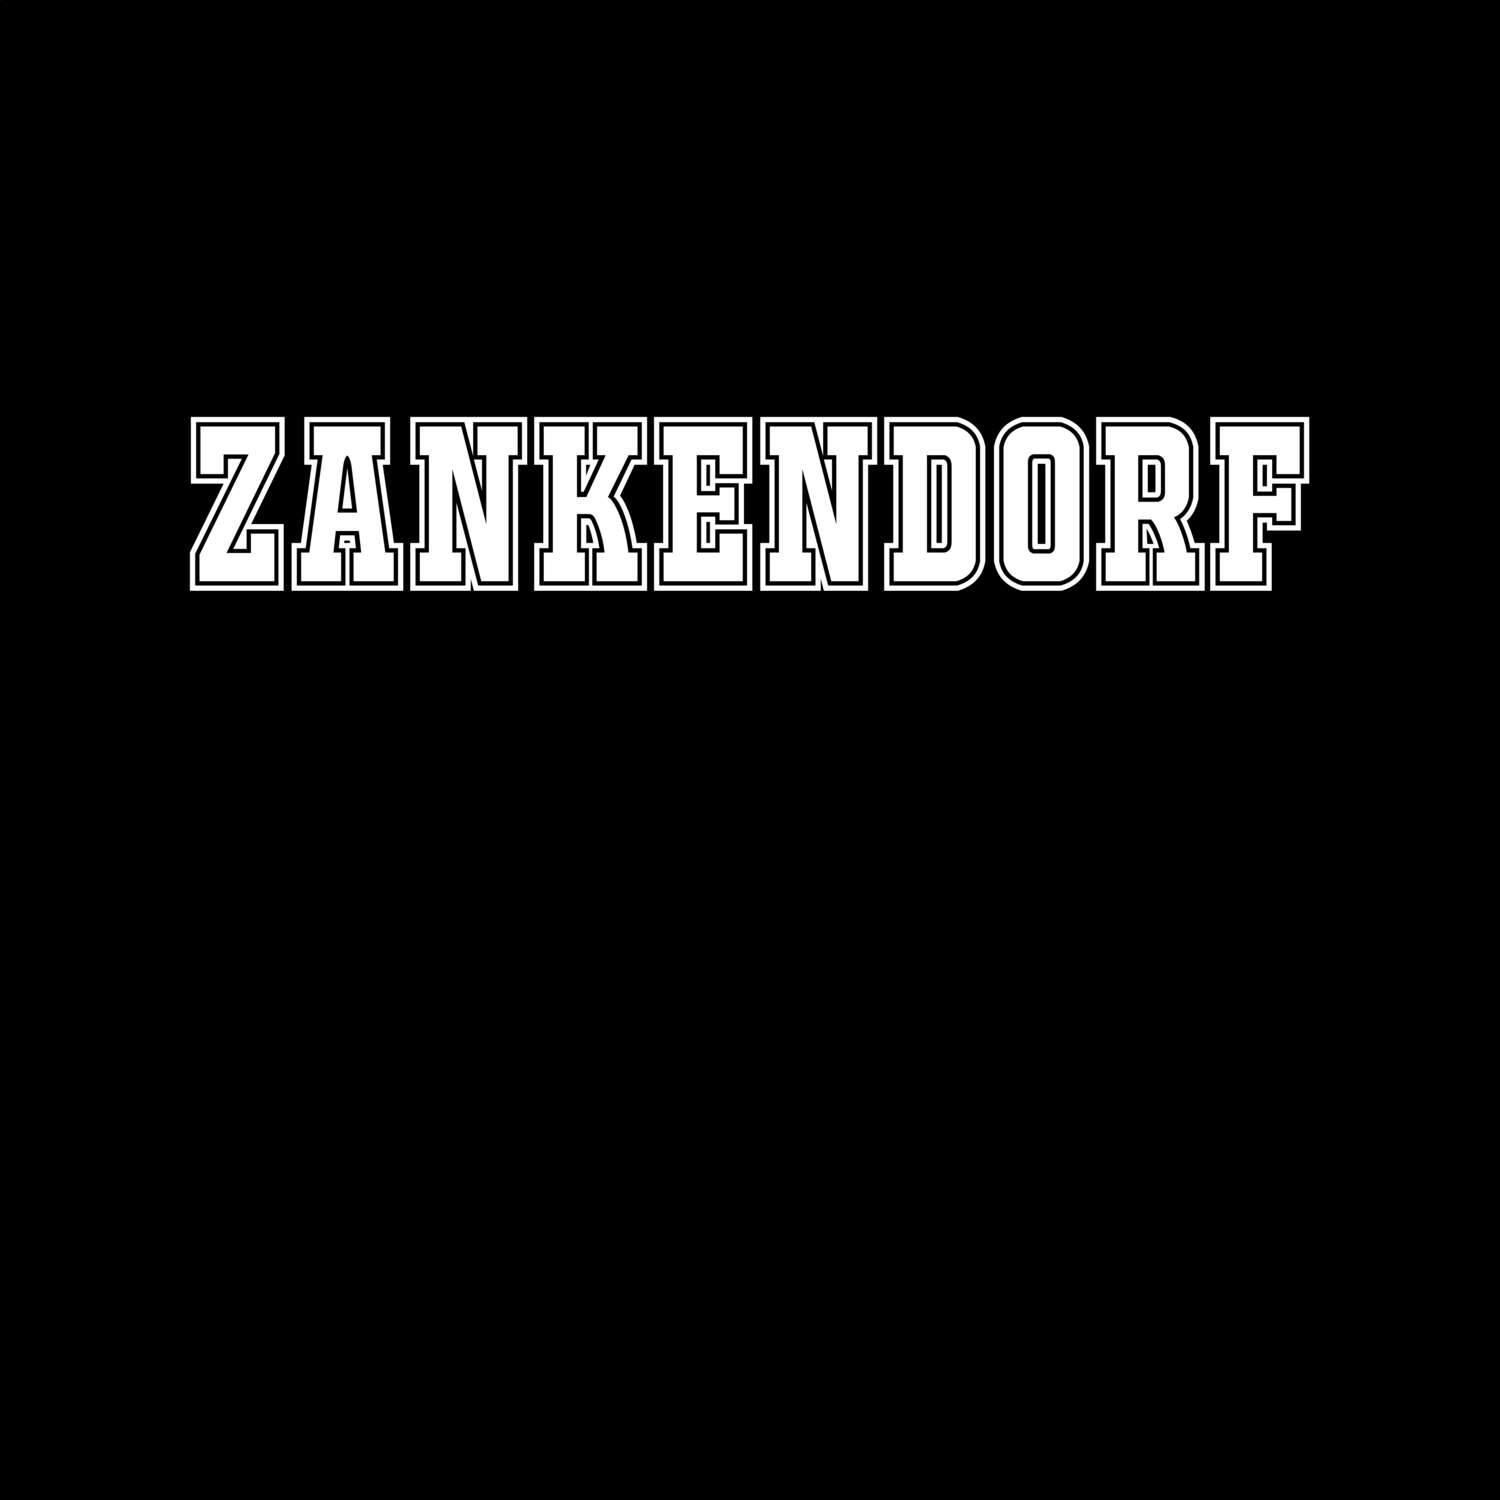 Zankendorf T-Shirt »Classic«